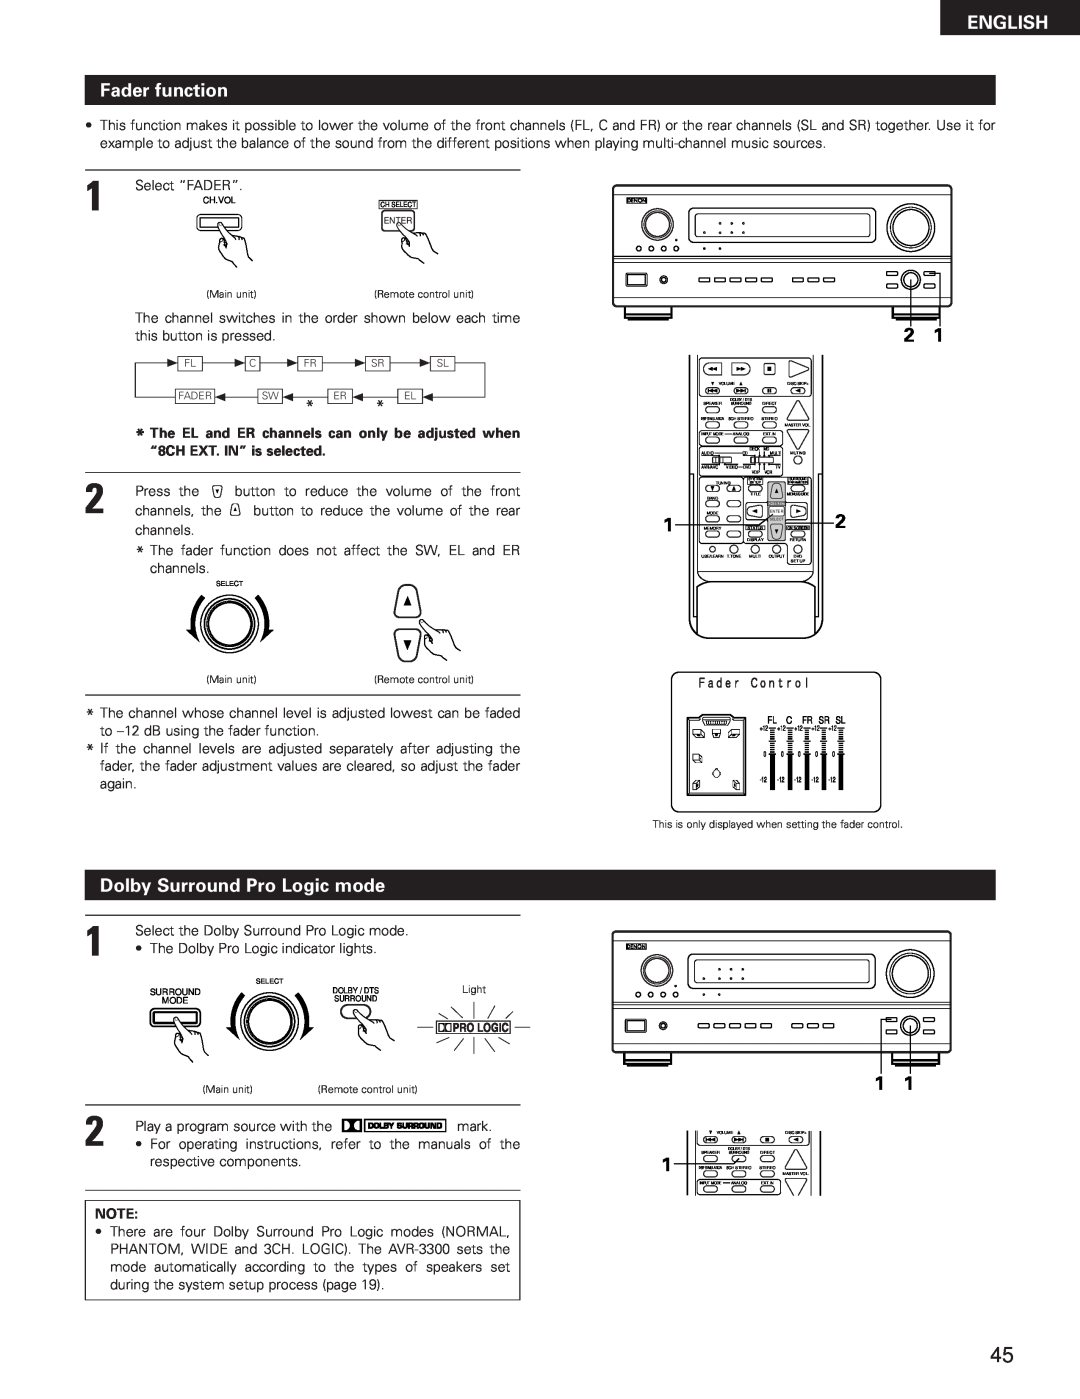 Denon AVR-3300 manual ENGLISH Fader function, Dolby Surround Pro Logic mode 